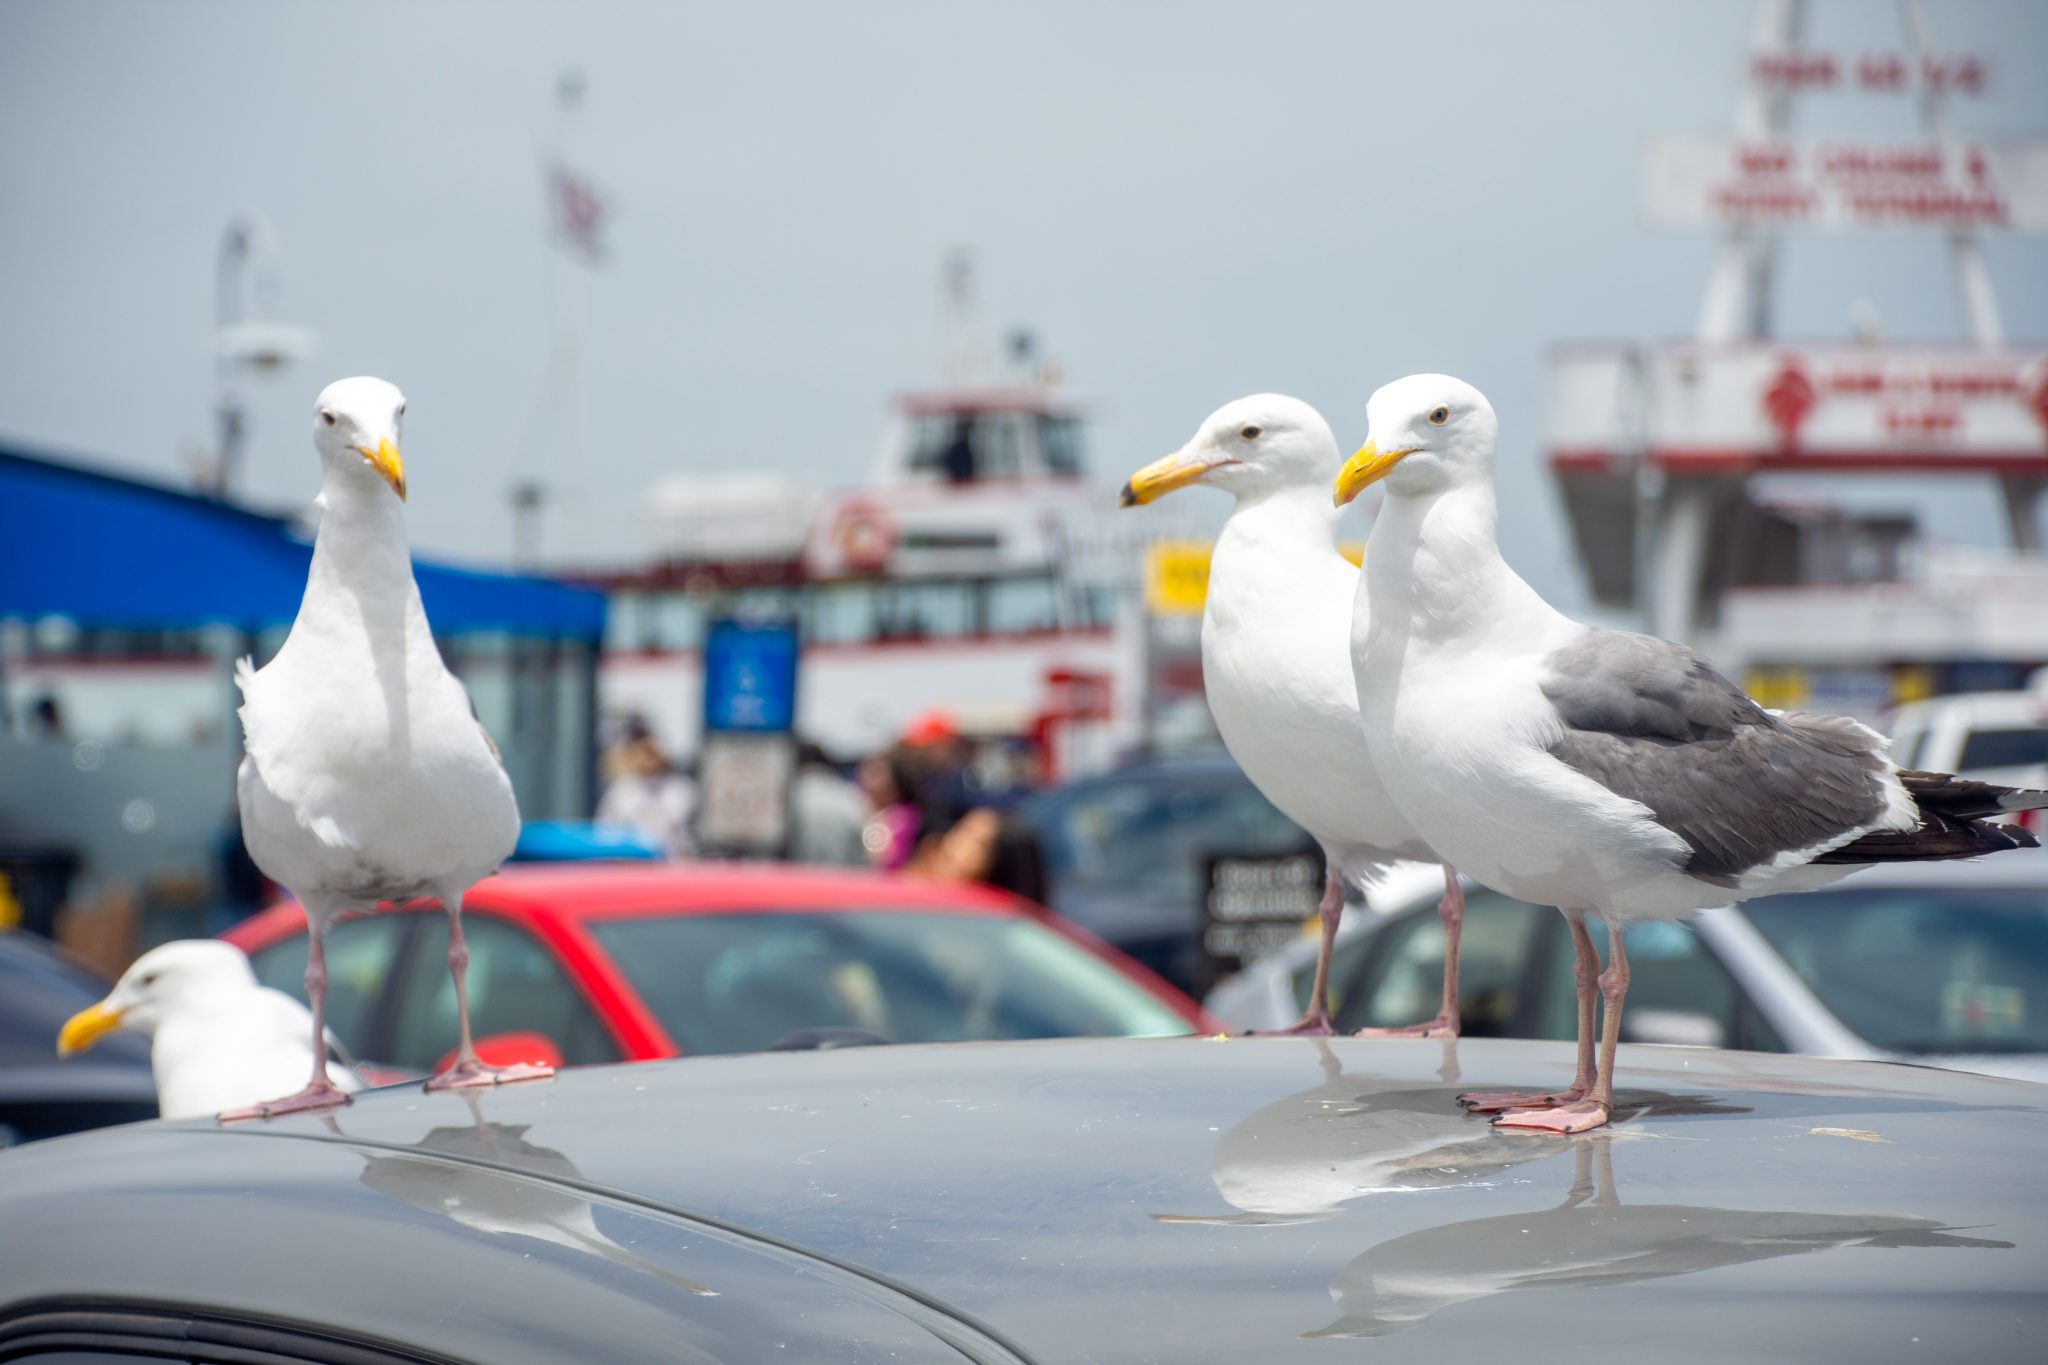 Seagulls on a car at Fisherman's Wharf in San Francisco, California